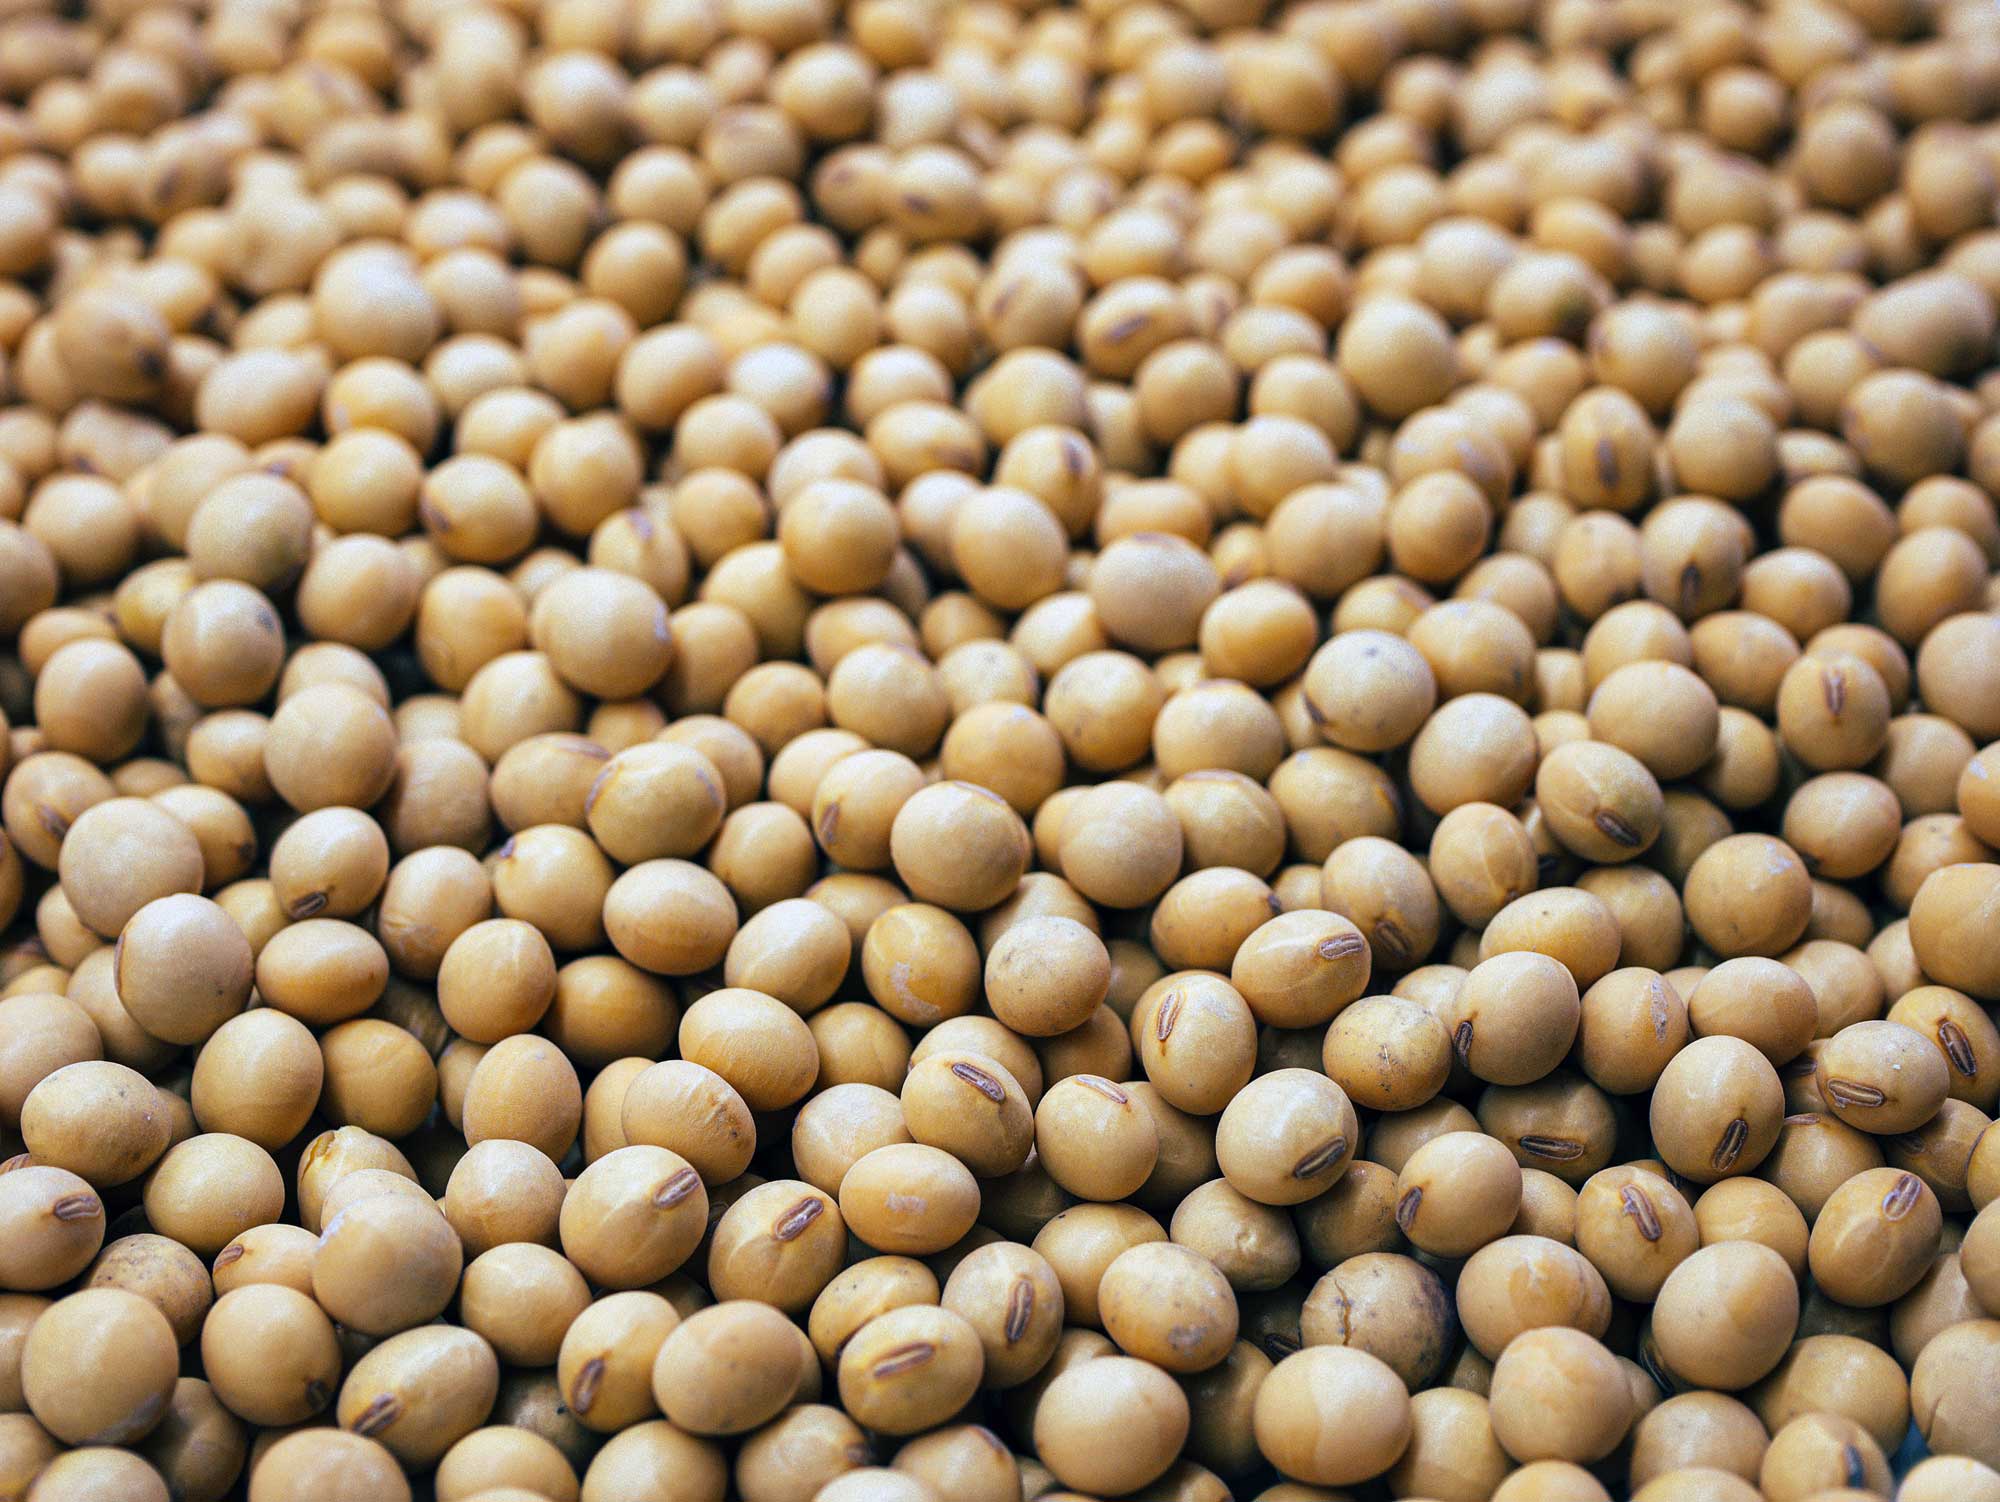 soya-beans-soy-organic-oscar-ochoa-QL_XDX5U4ts-unsplash.jpg